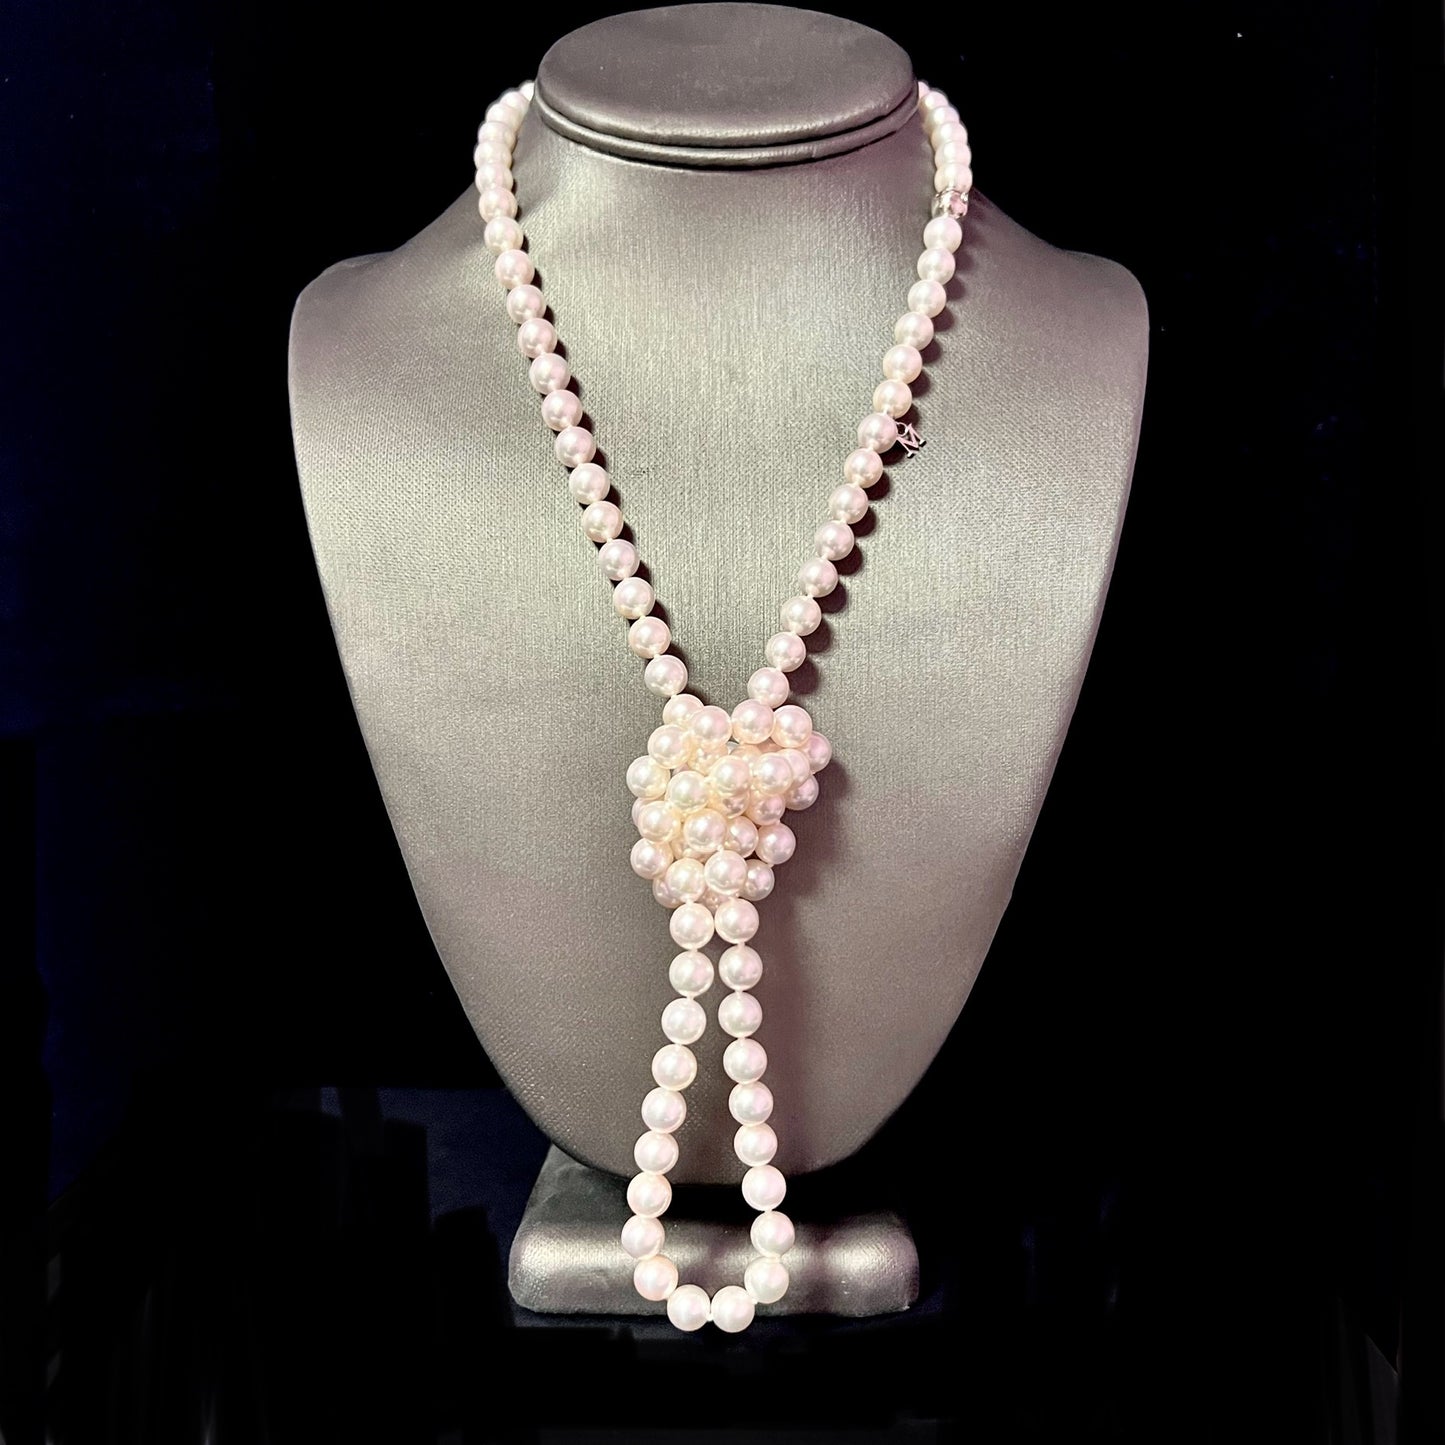 Mikimoto Estate Akoya Pearl Diamond Necklace 36" 18k Gold 8 mm Certified $13,950 401397 - Certified Fine Jewelry